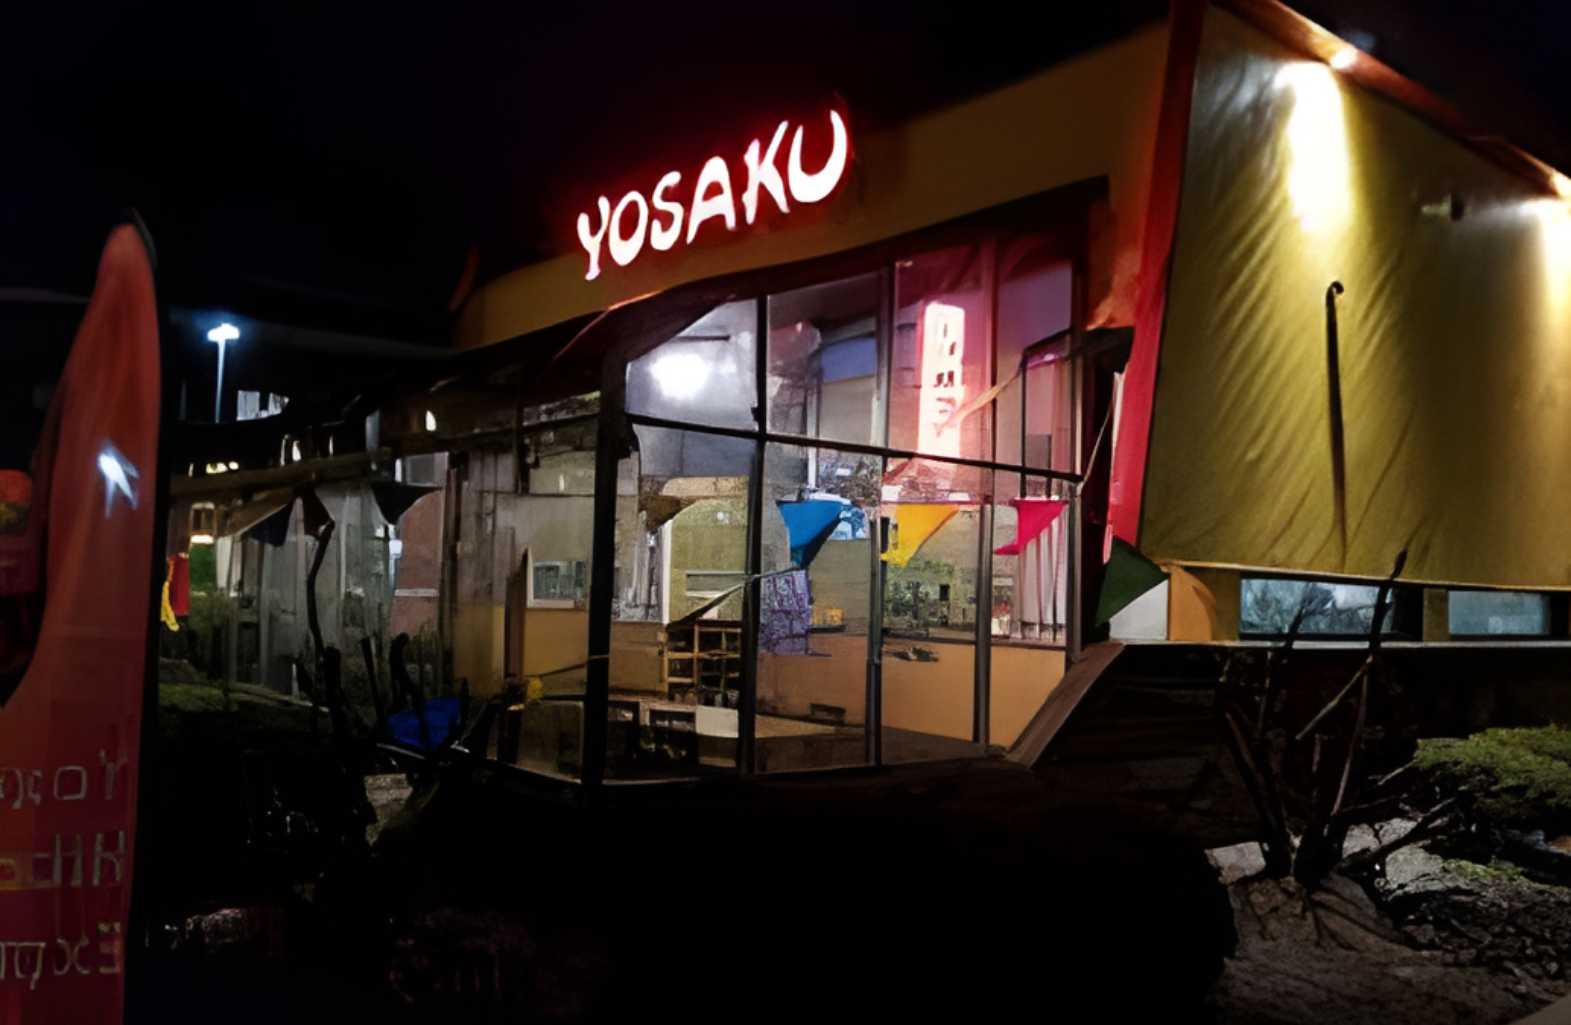 Yosaku Hibachi Express Restaurants in Anderson, IN